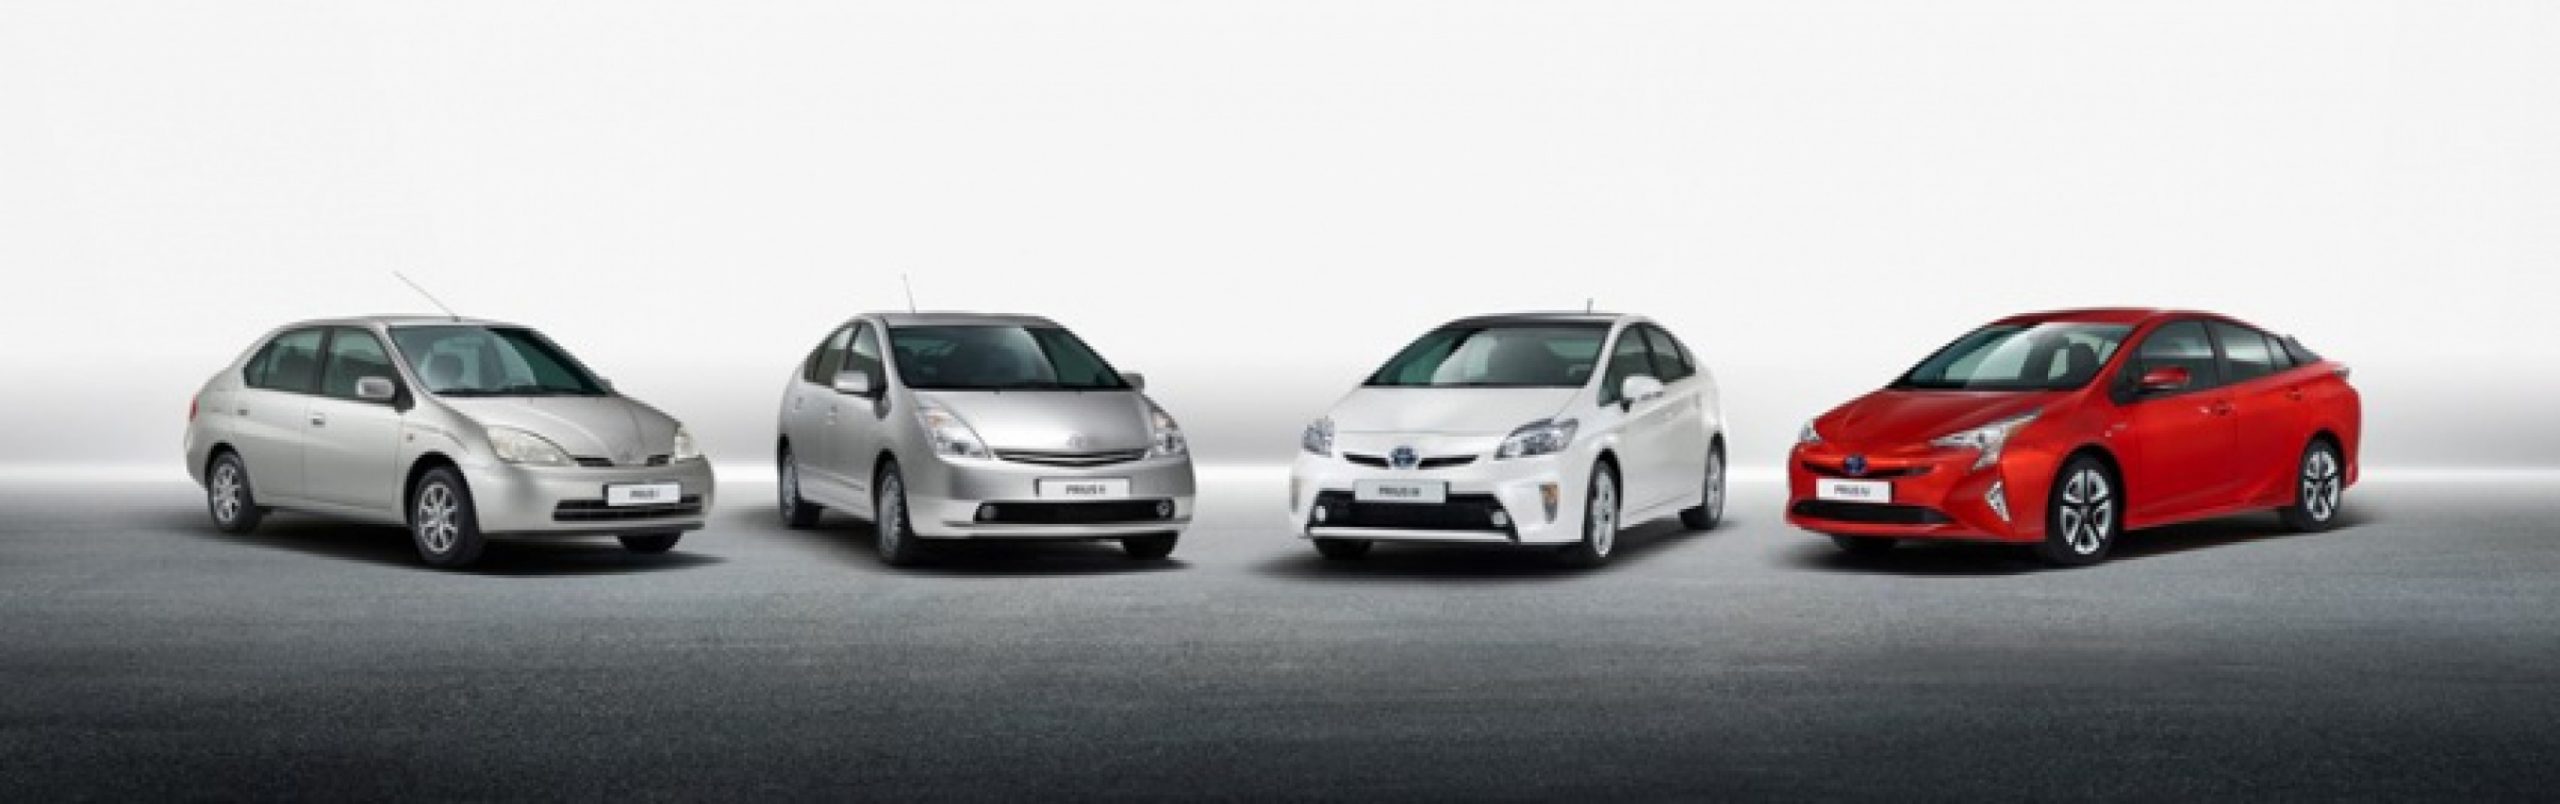 autos, cars, featured, toyota, prius, toyota unveils all-new fourth-generation prius